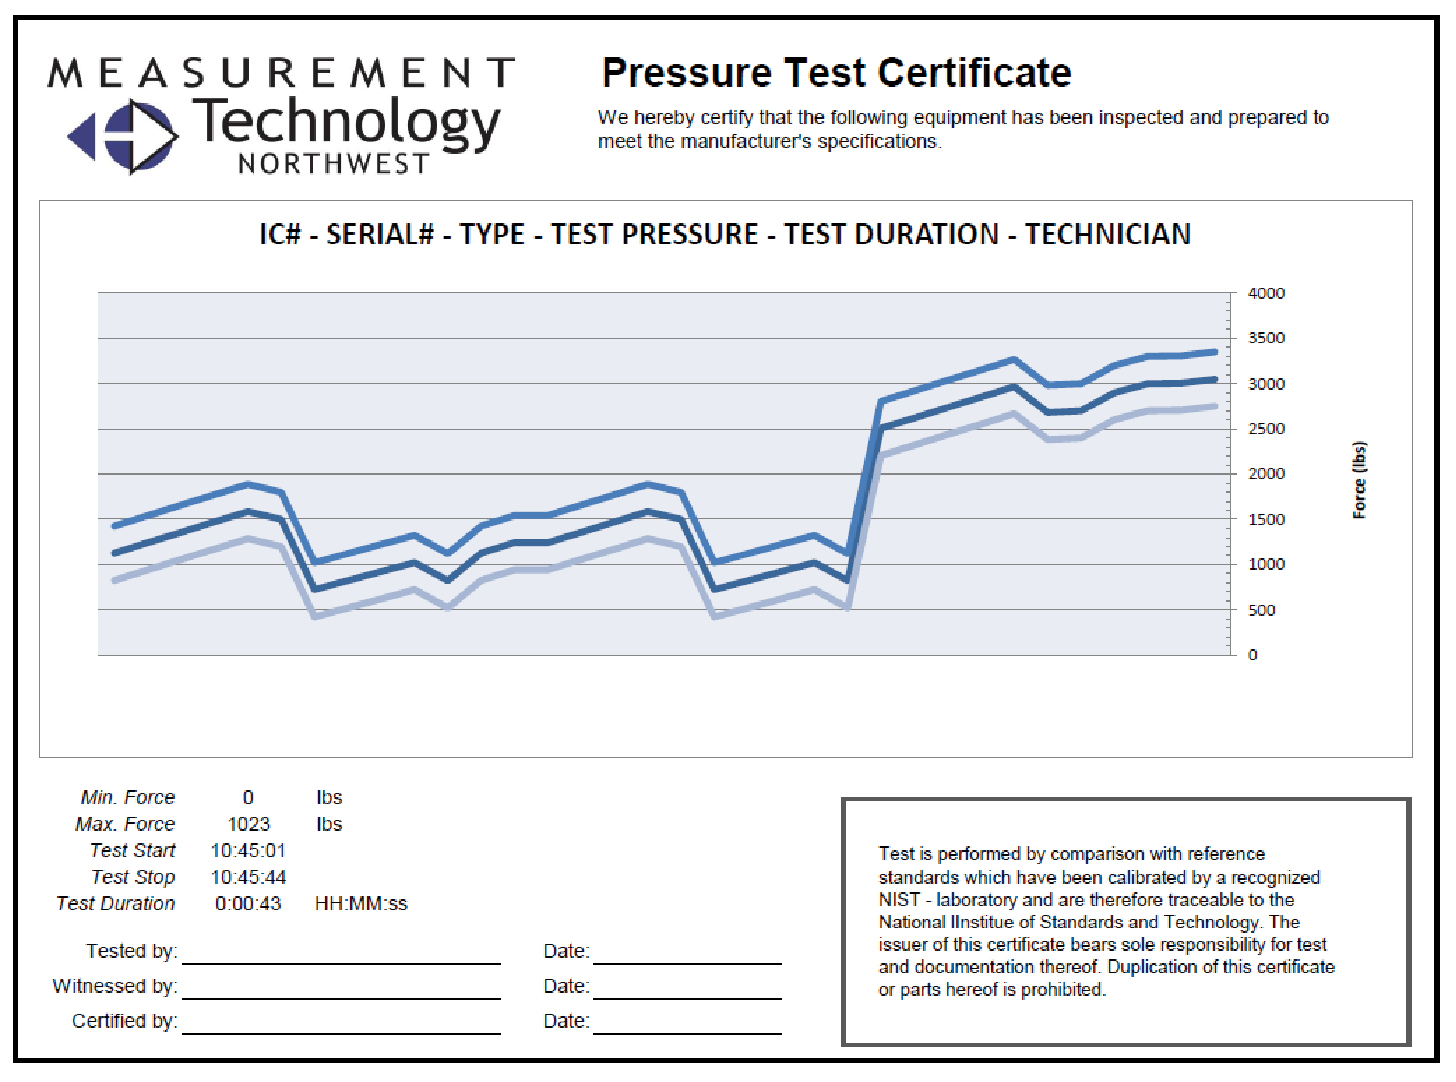 Digital Chart Recorder For Pressure Testing